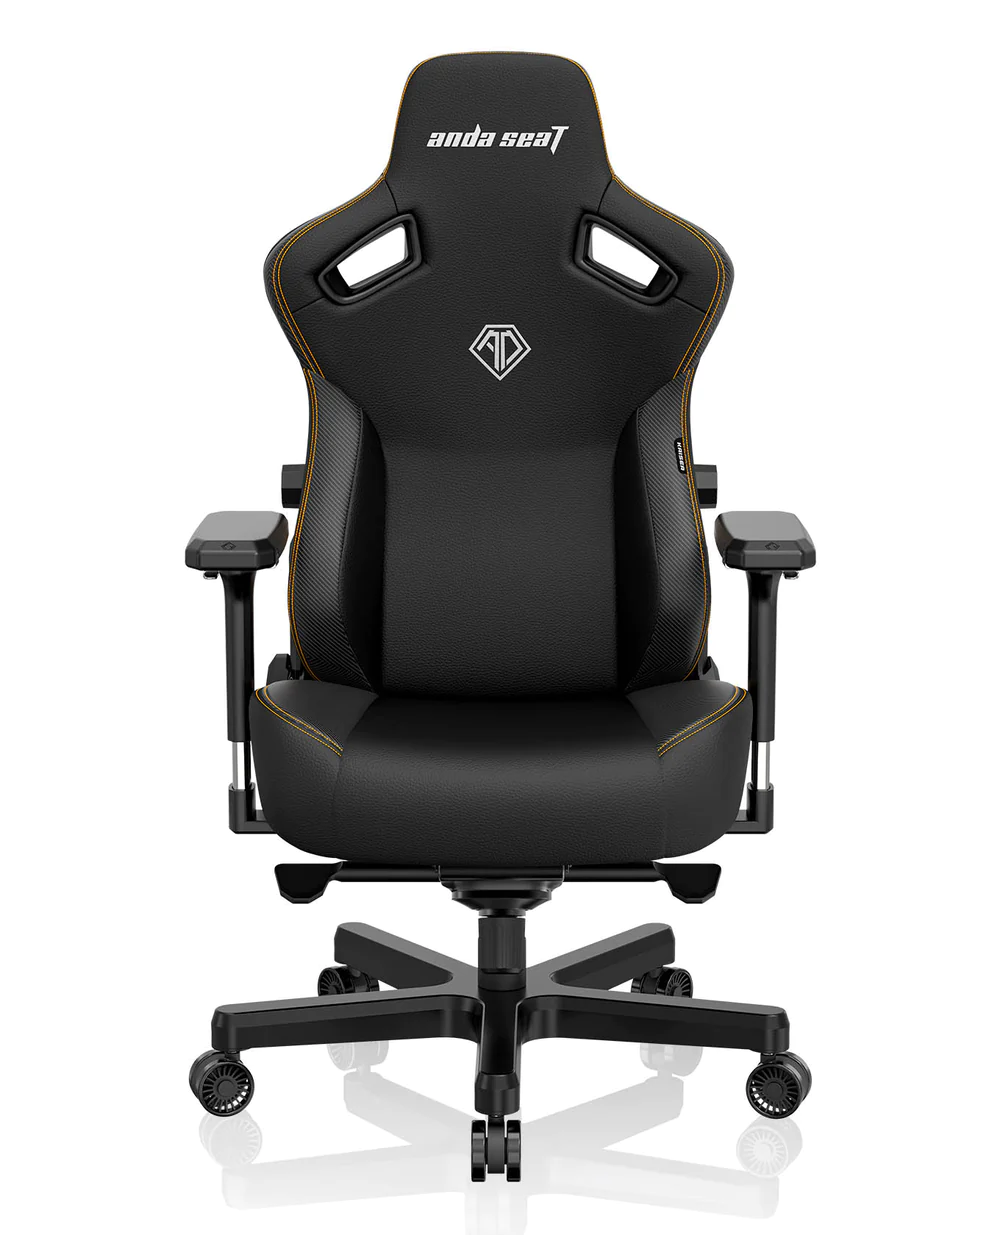 kaiser 3 gaming chair black pvc leather jpg 1000x